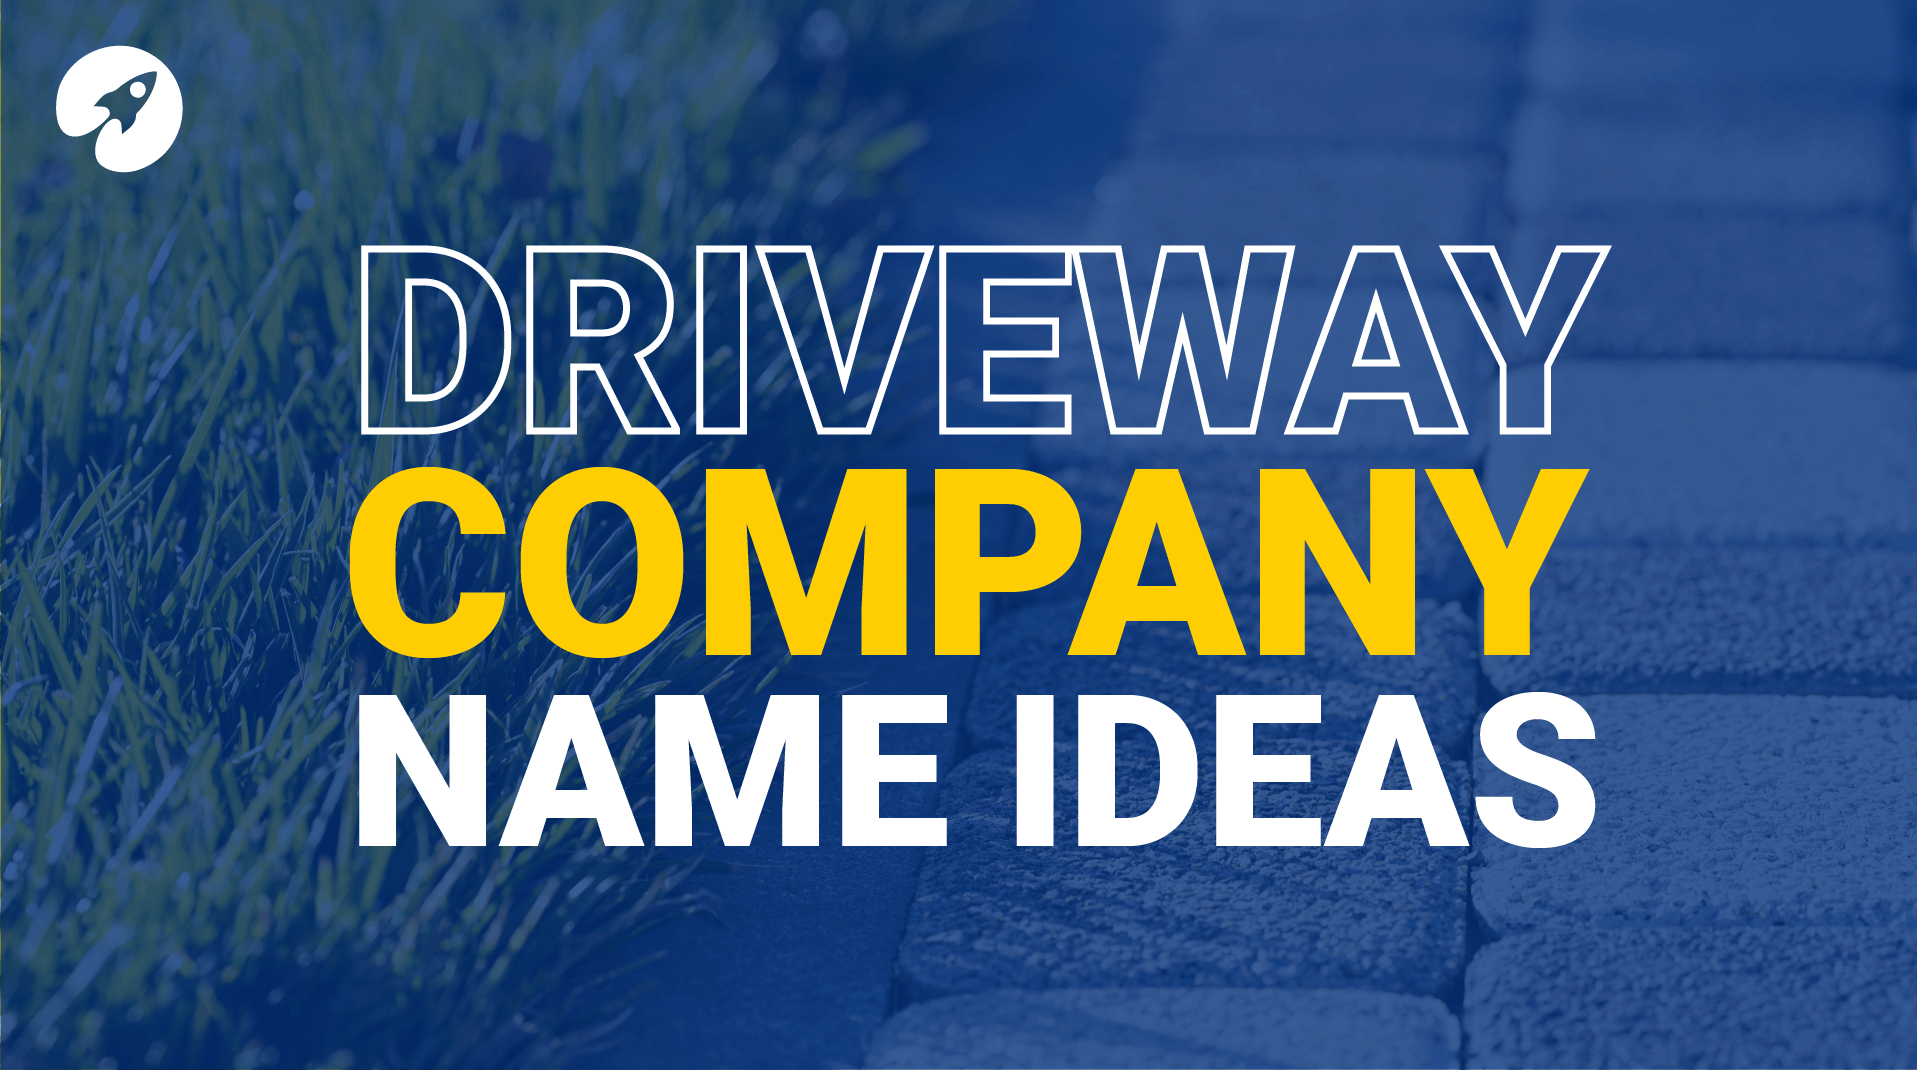 Driveway company name ideas